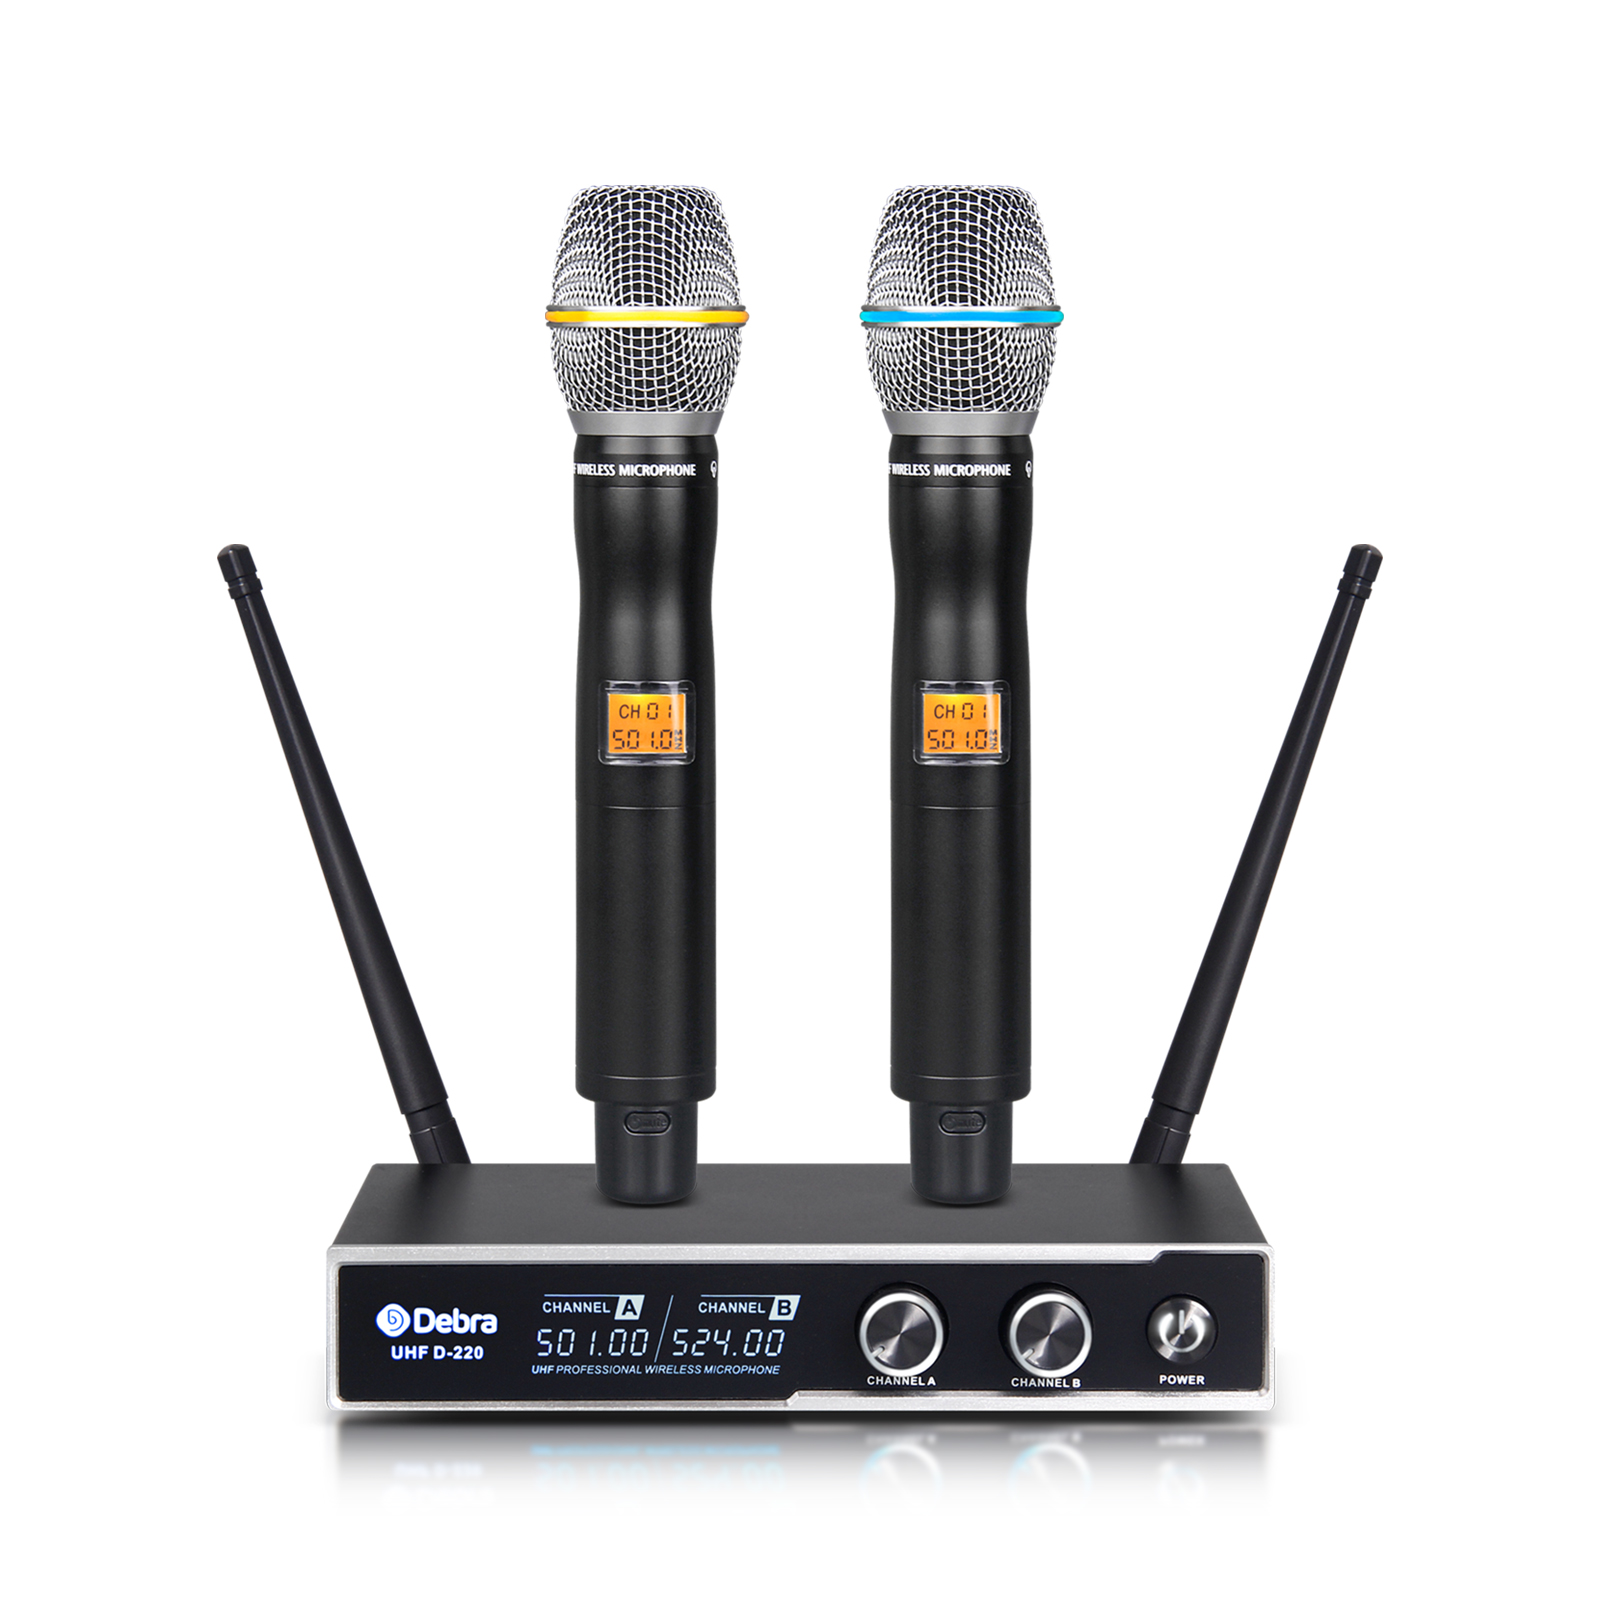 D-220 UHF Wireless Microphone